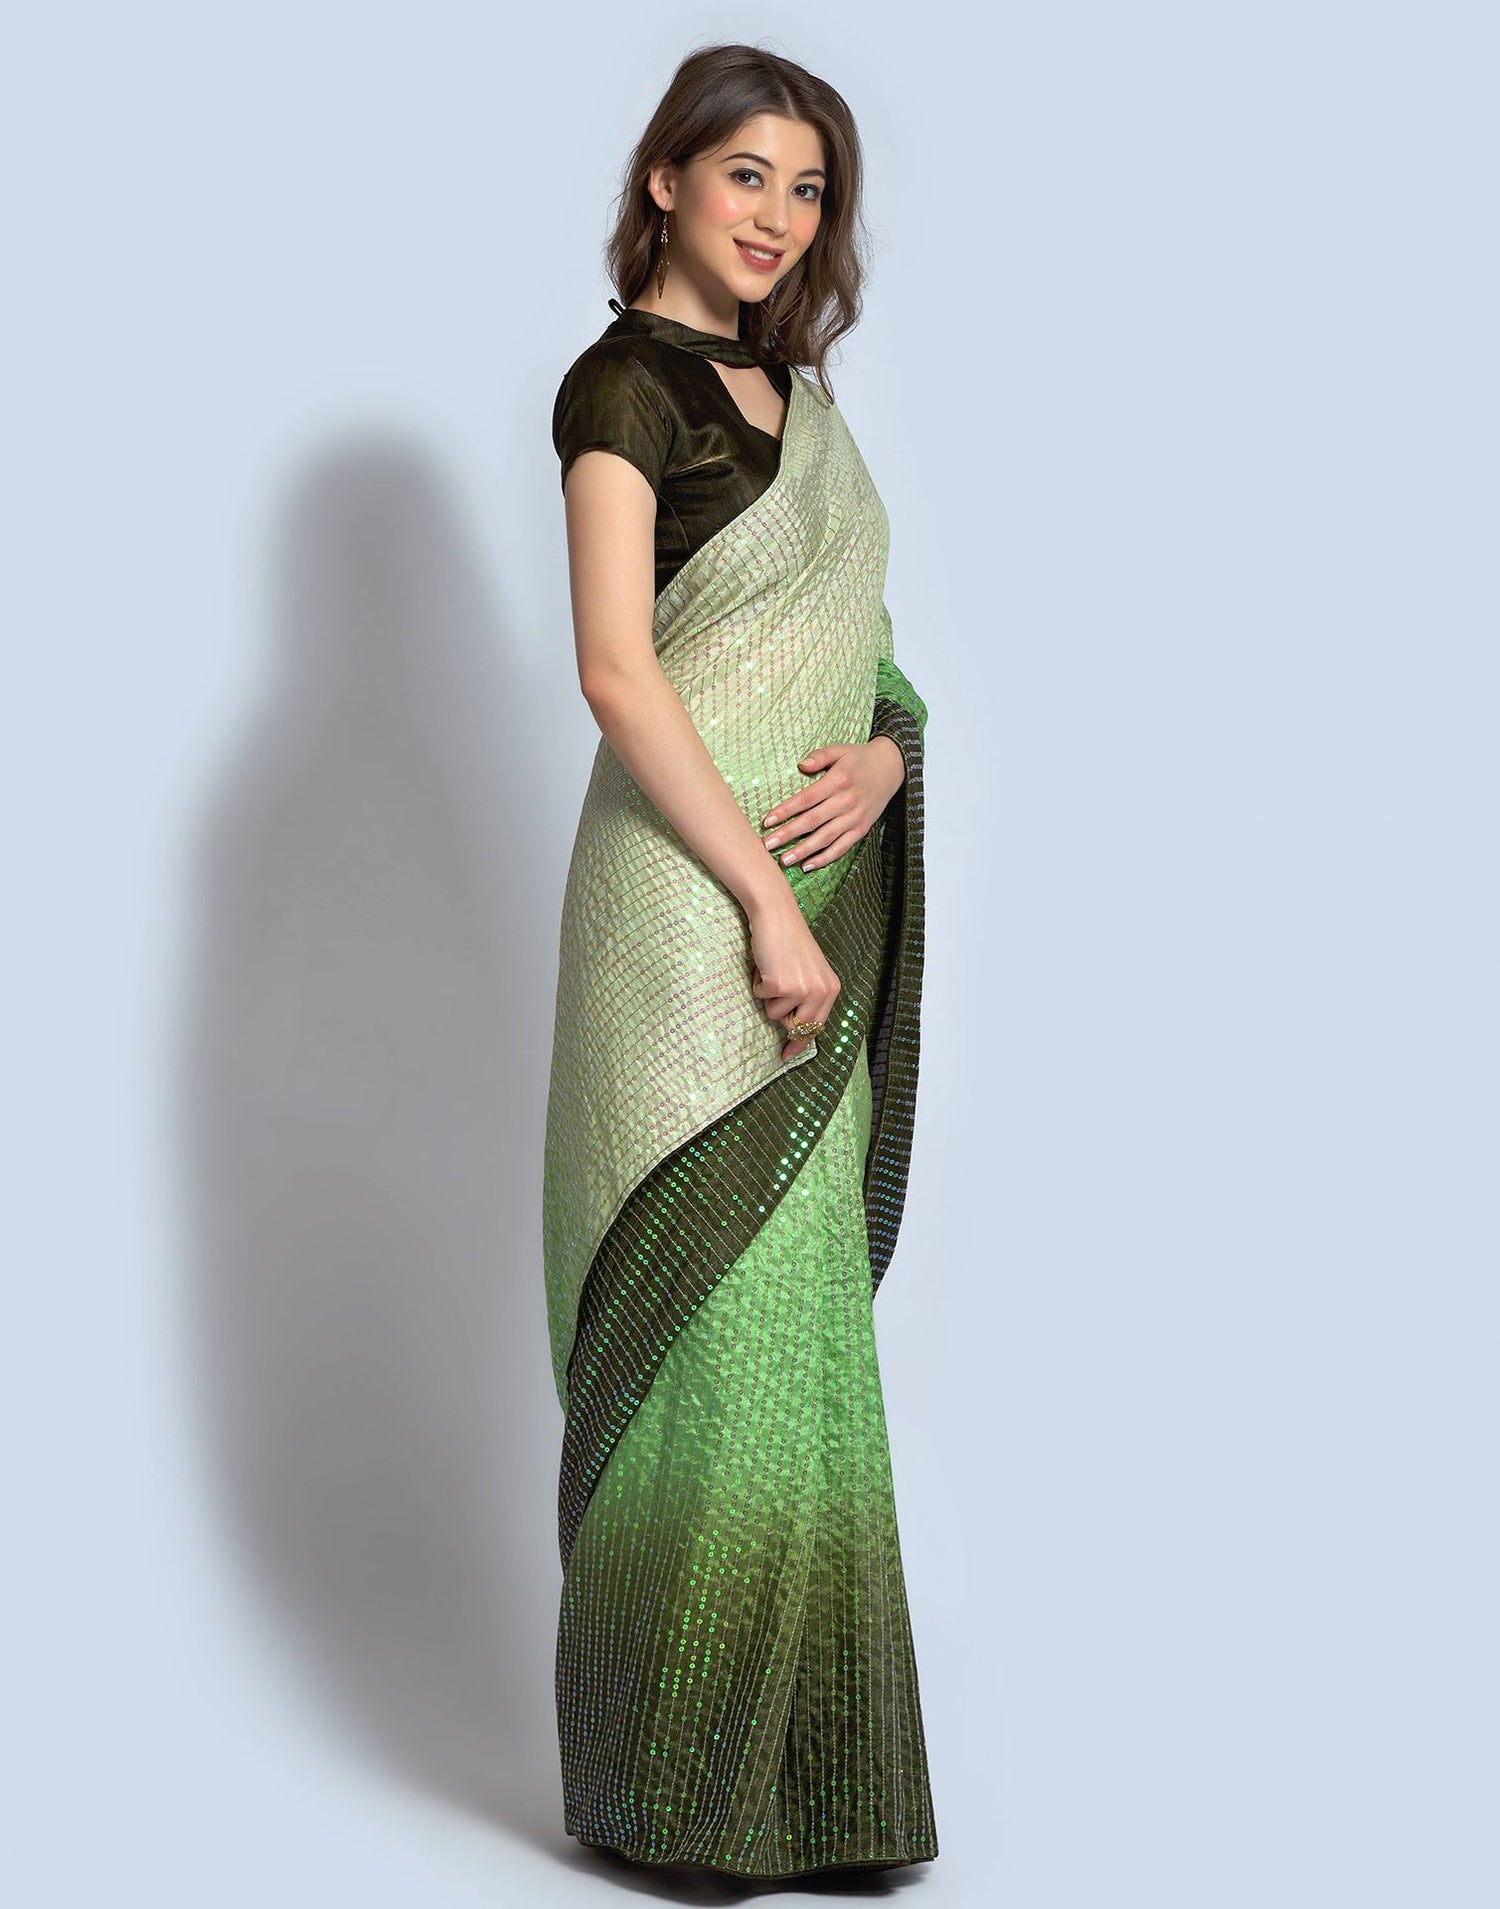 sadika Women's Trending Saubhagyavati Lace Dola Silk Sequance Embroidery  Mirror Work Blouse With Saree Belt (Green) : : Fashion